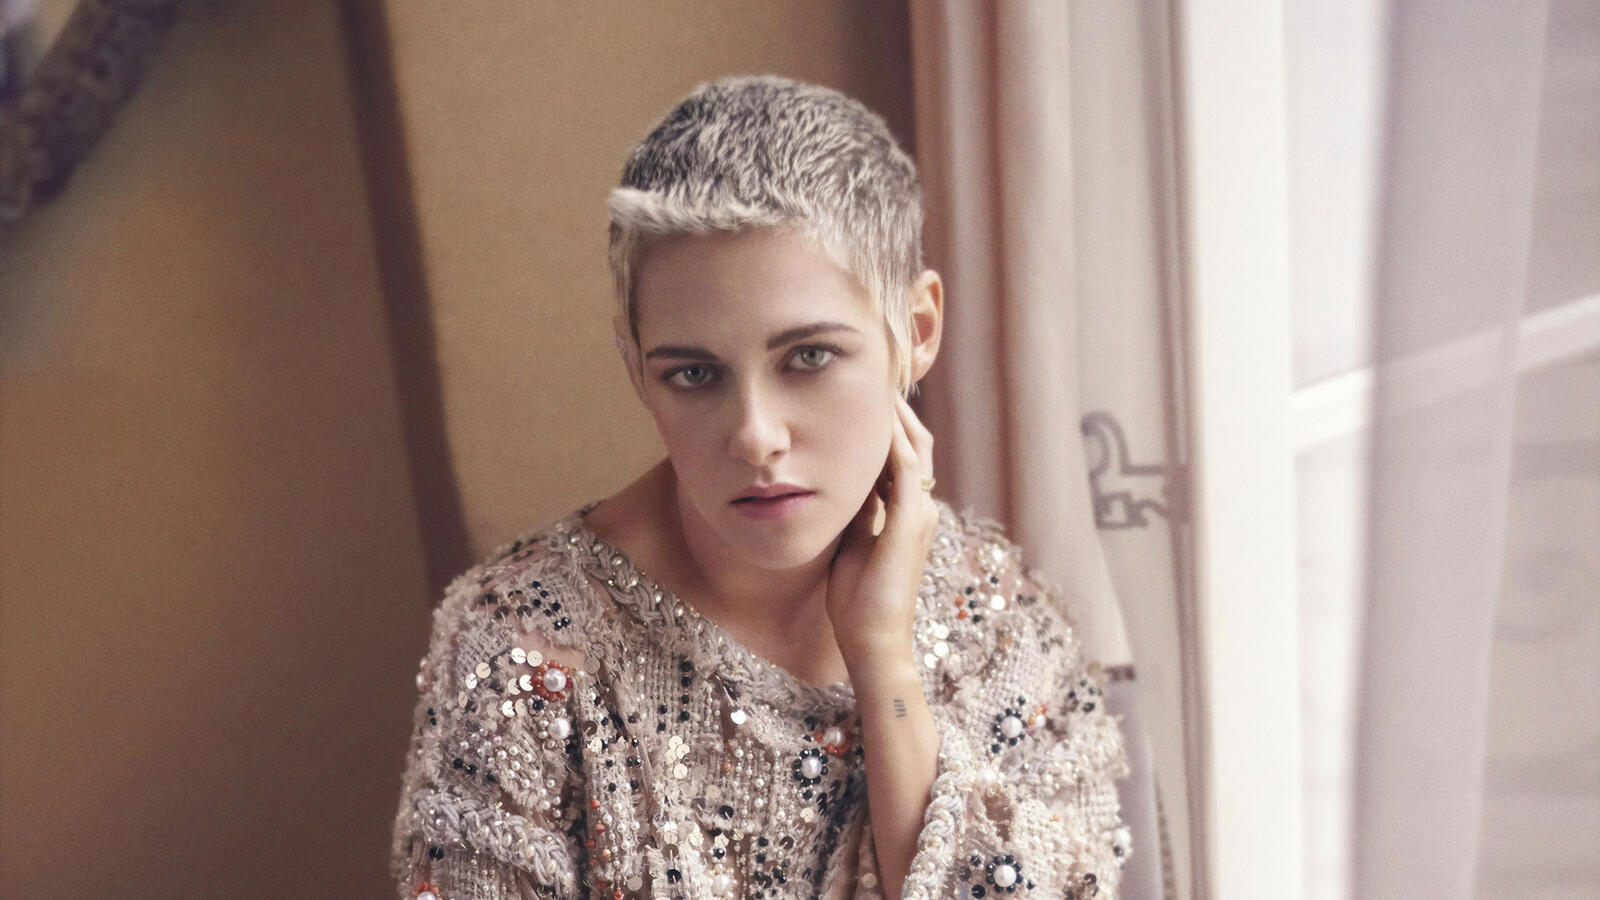 Wallpapers Kristen Stewart short haircut celebrities on the desktop